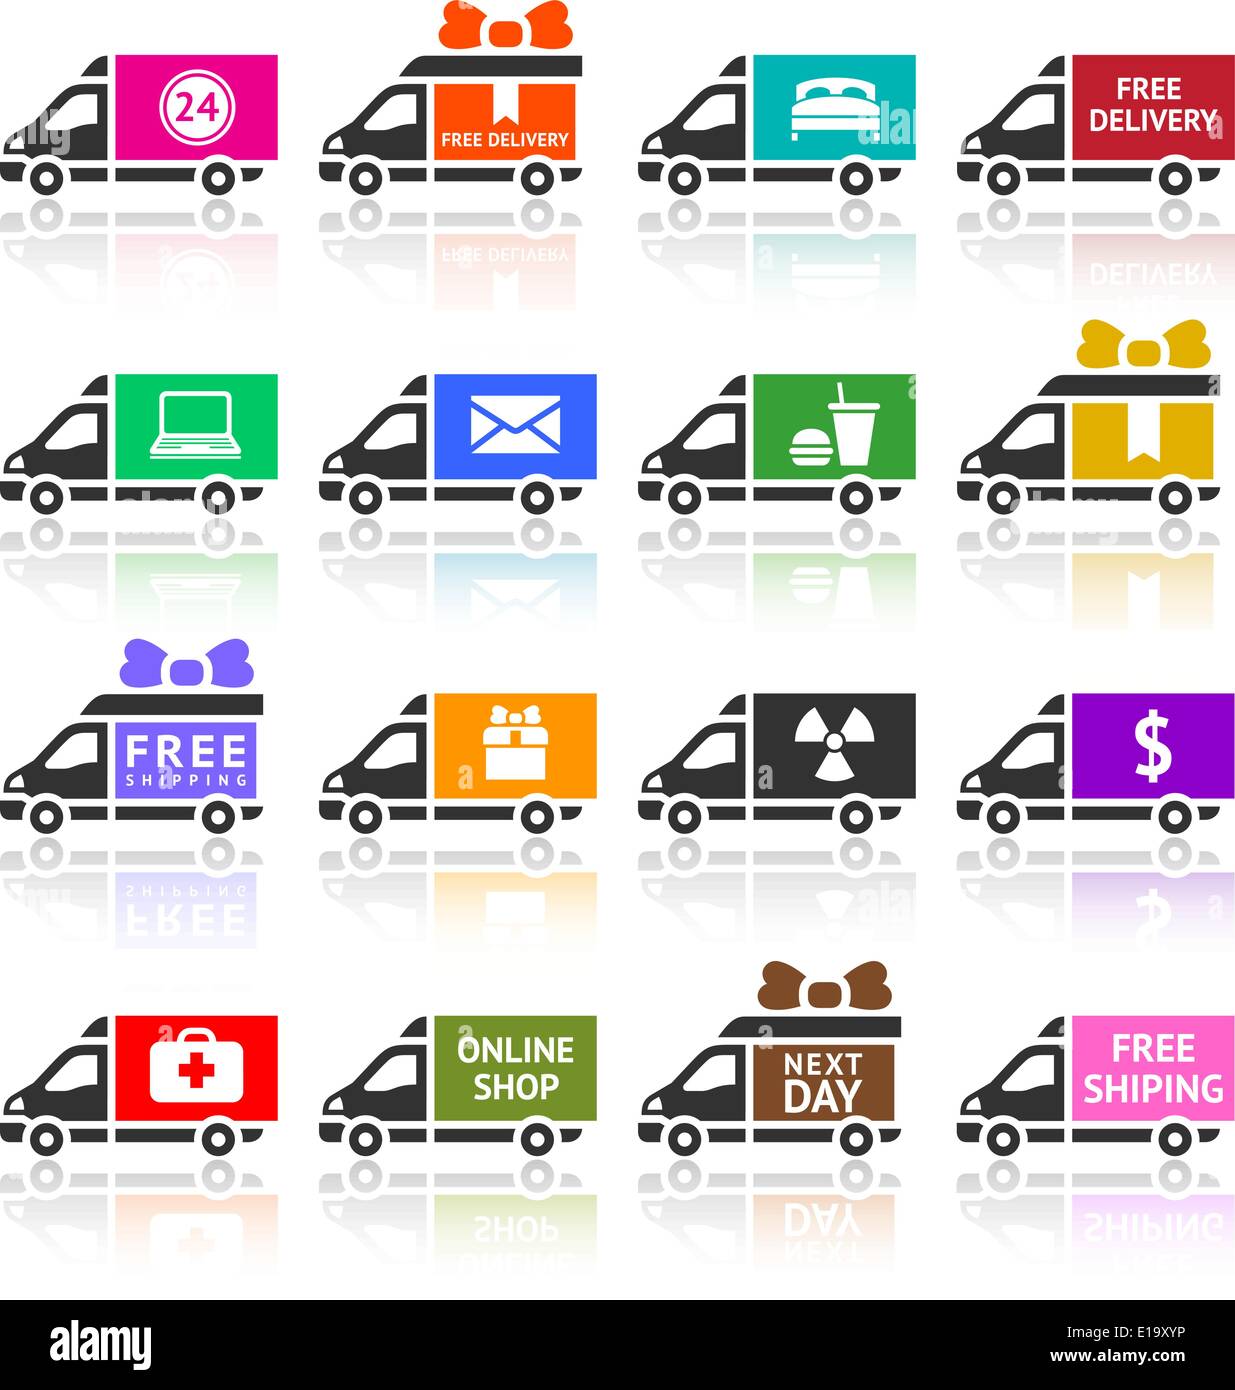 Reihe von Cargo LKW farbige Icons, Vektor-illustration Stock Vektor